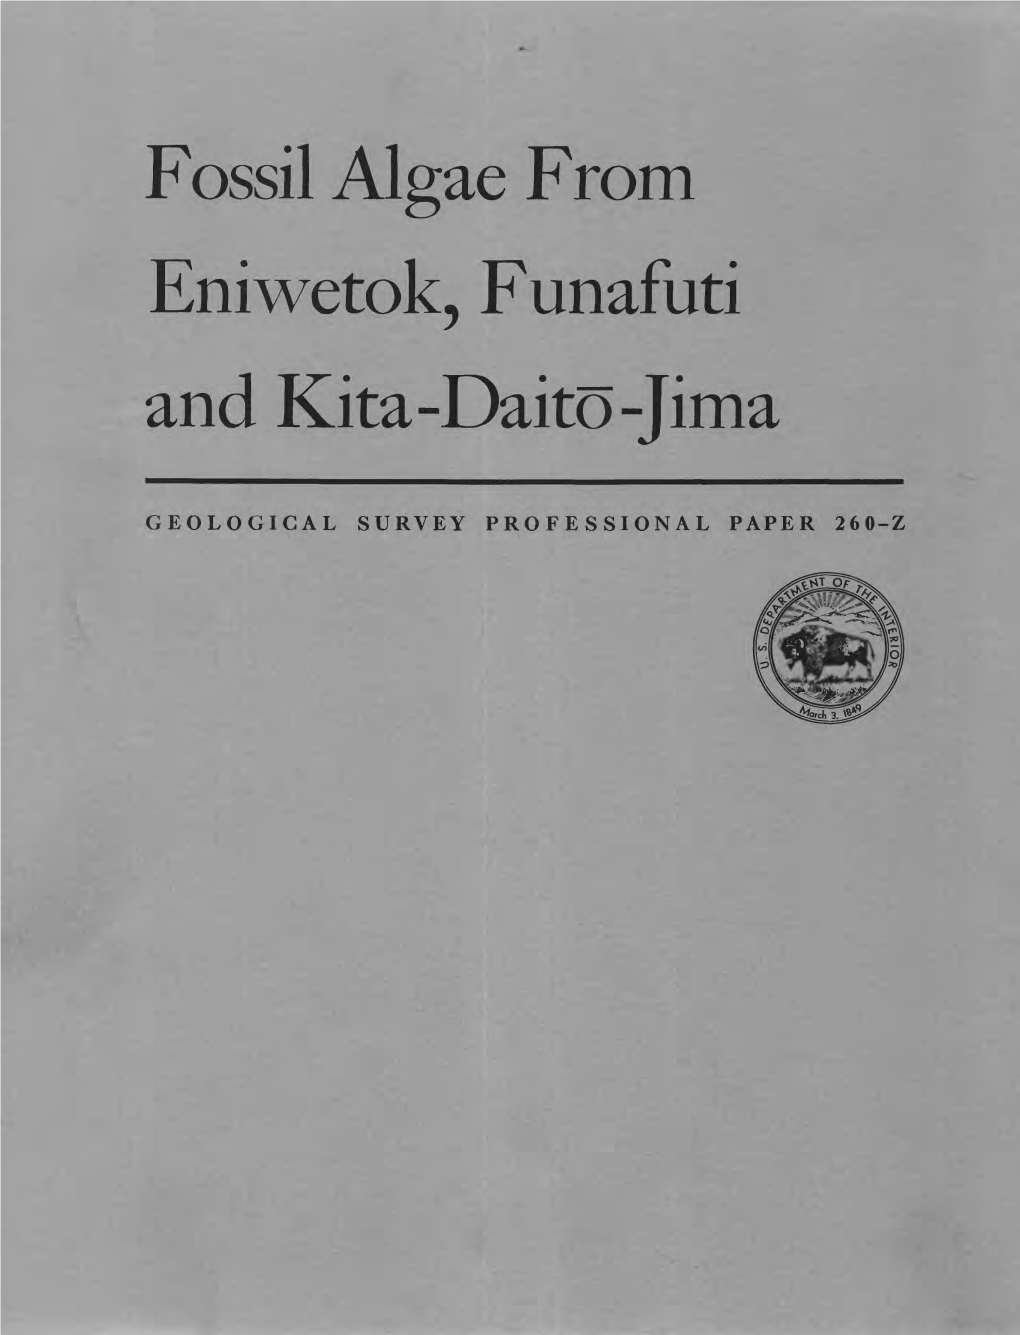 Fossil Algae from Eniwetok, Funafuti and Kita-Daito-Jima